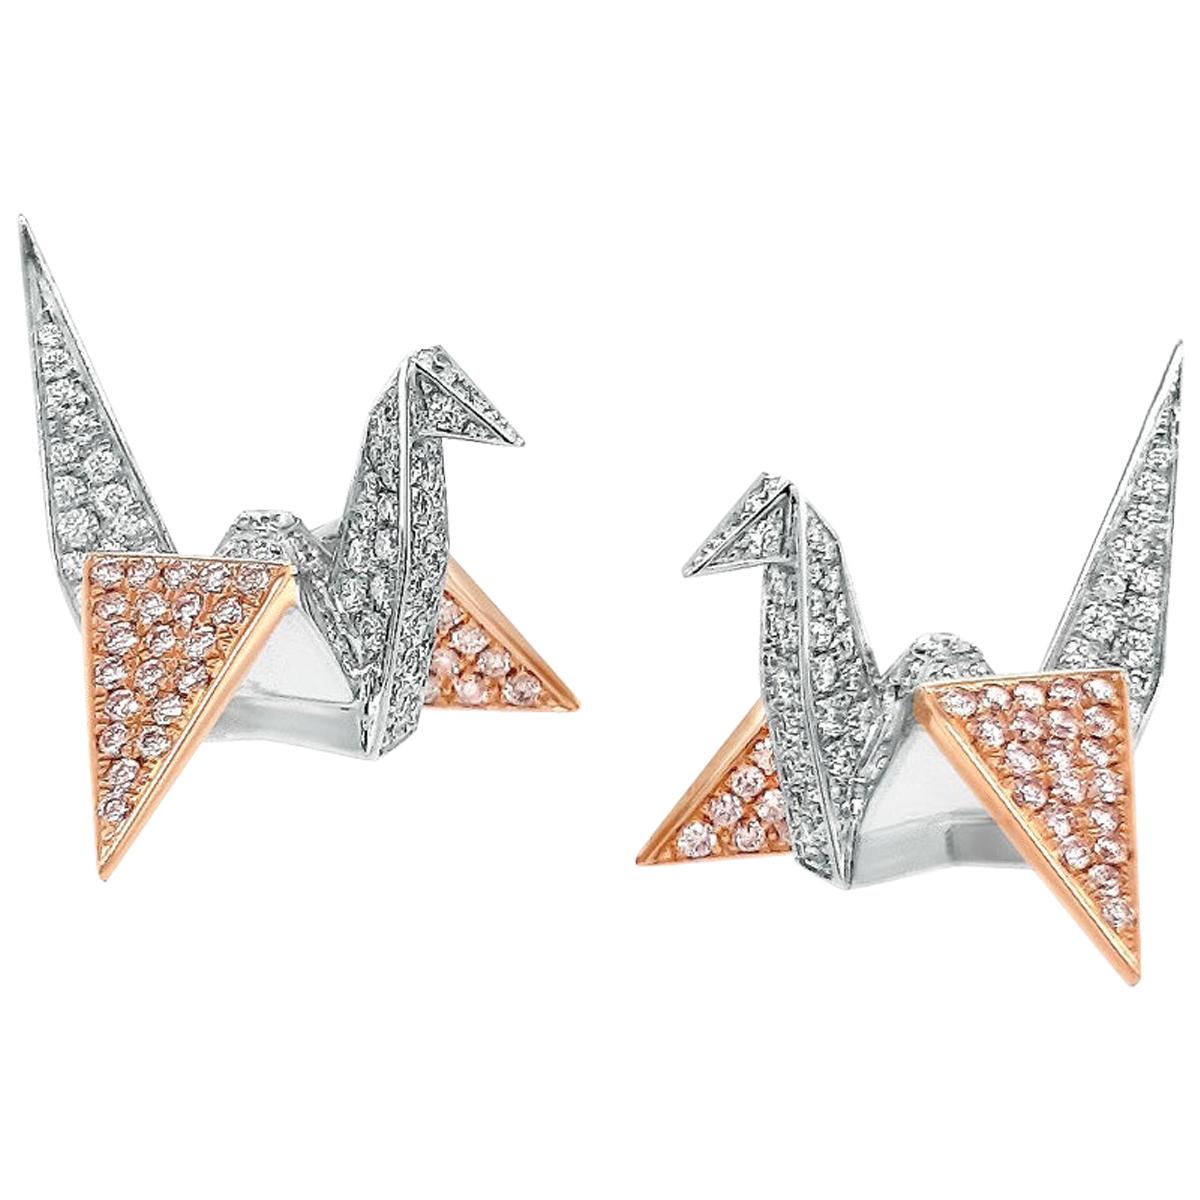 An Order of Bling Ninja Cranes Pink Diamond Edition For Sale